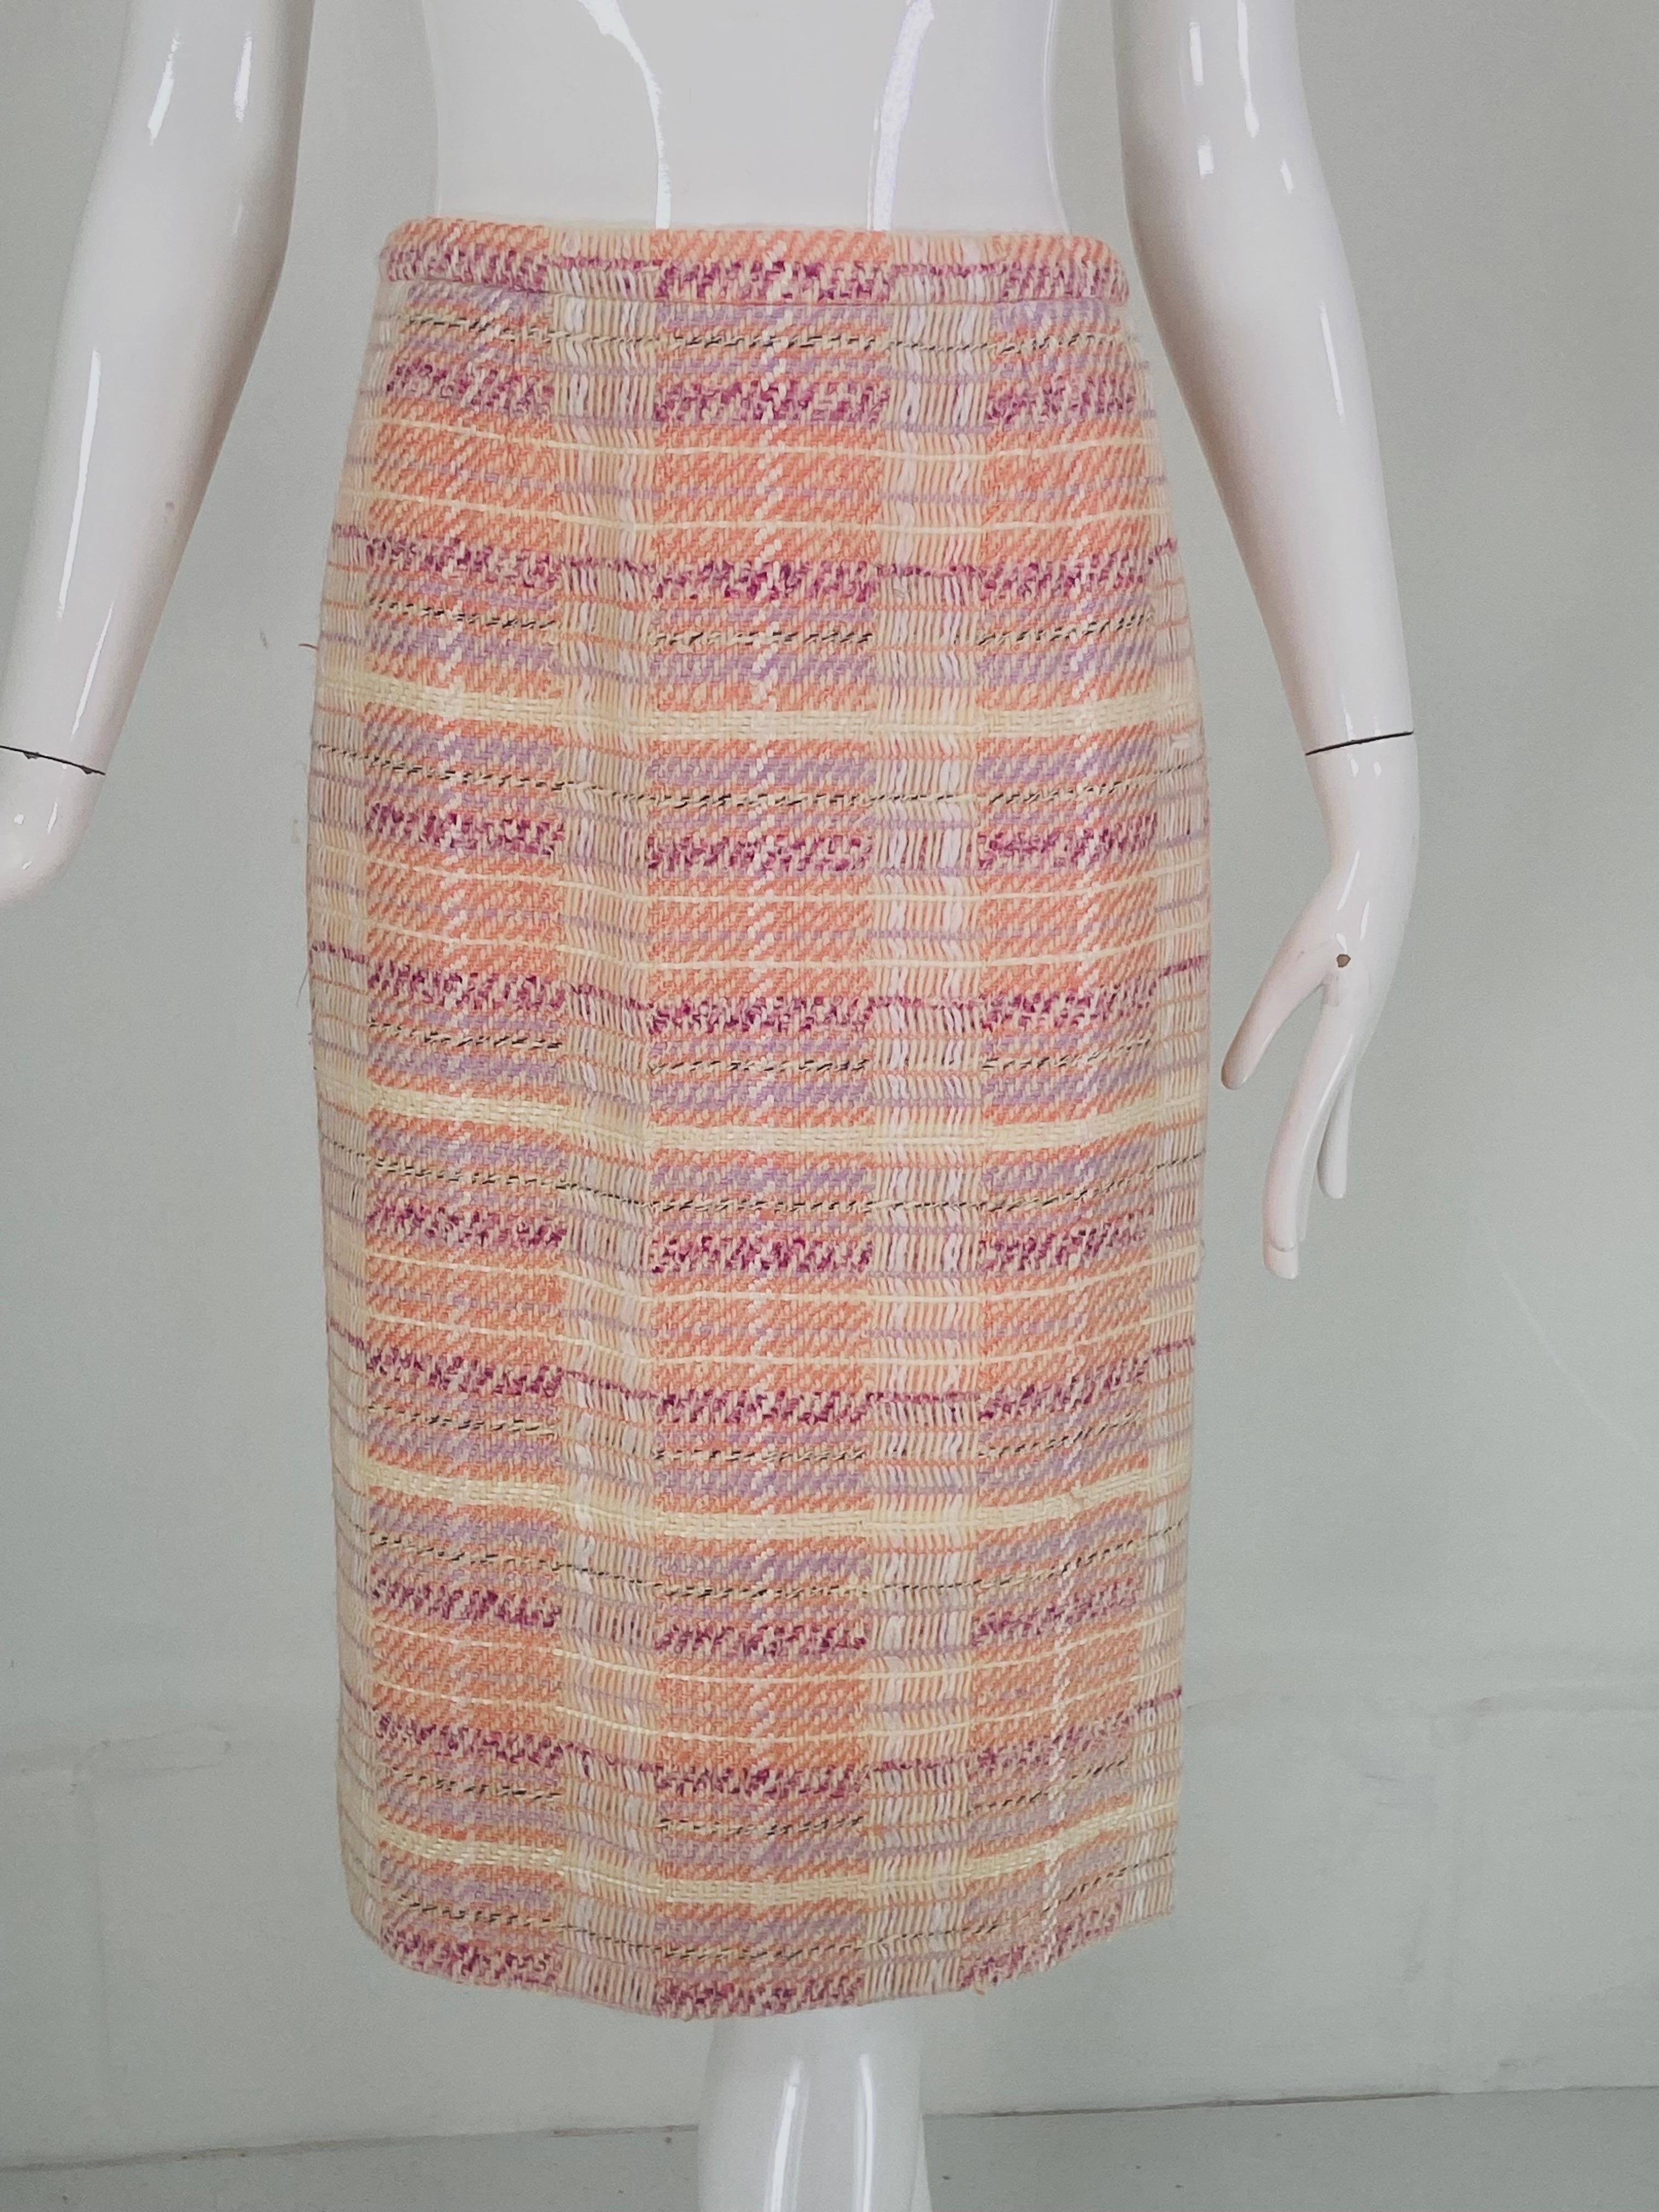 Chanel Creations Pastel Peach Cream Lavender Tweed Skirt Suit 1970s 3